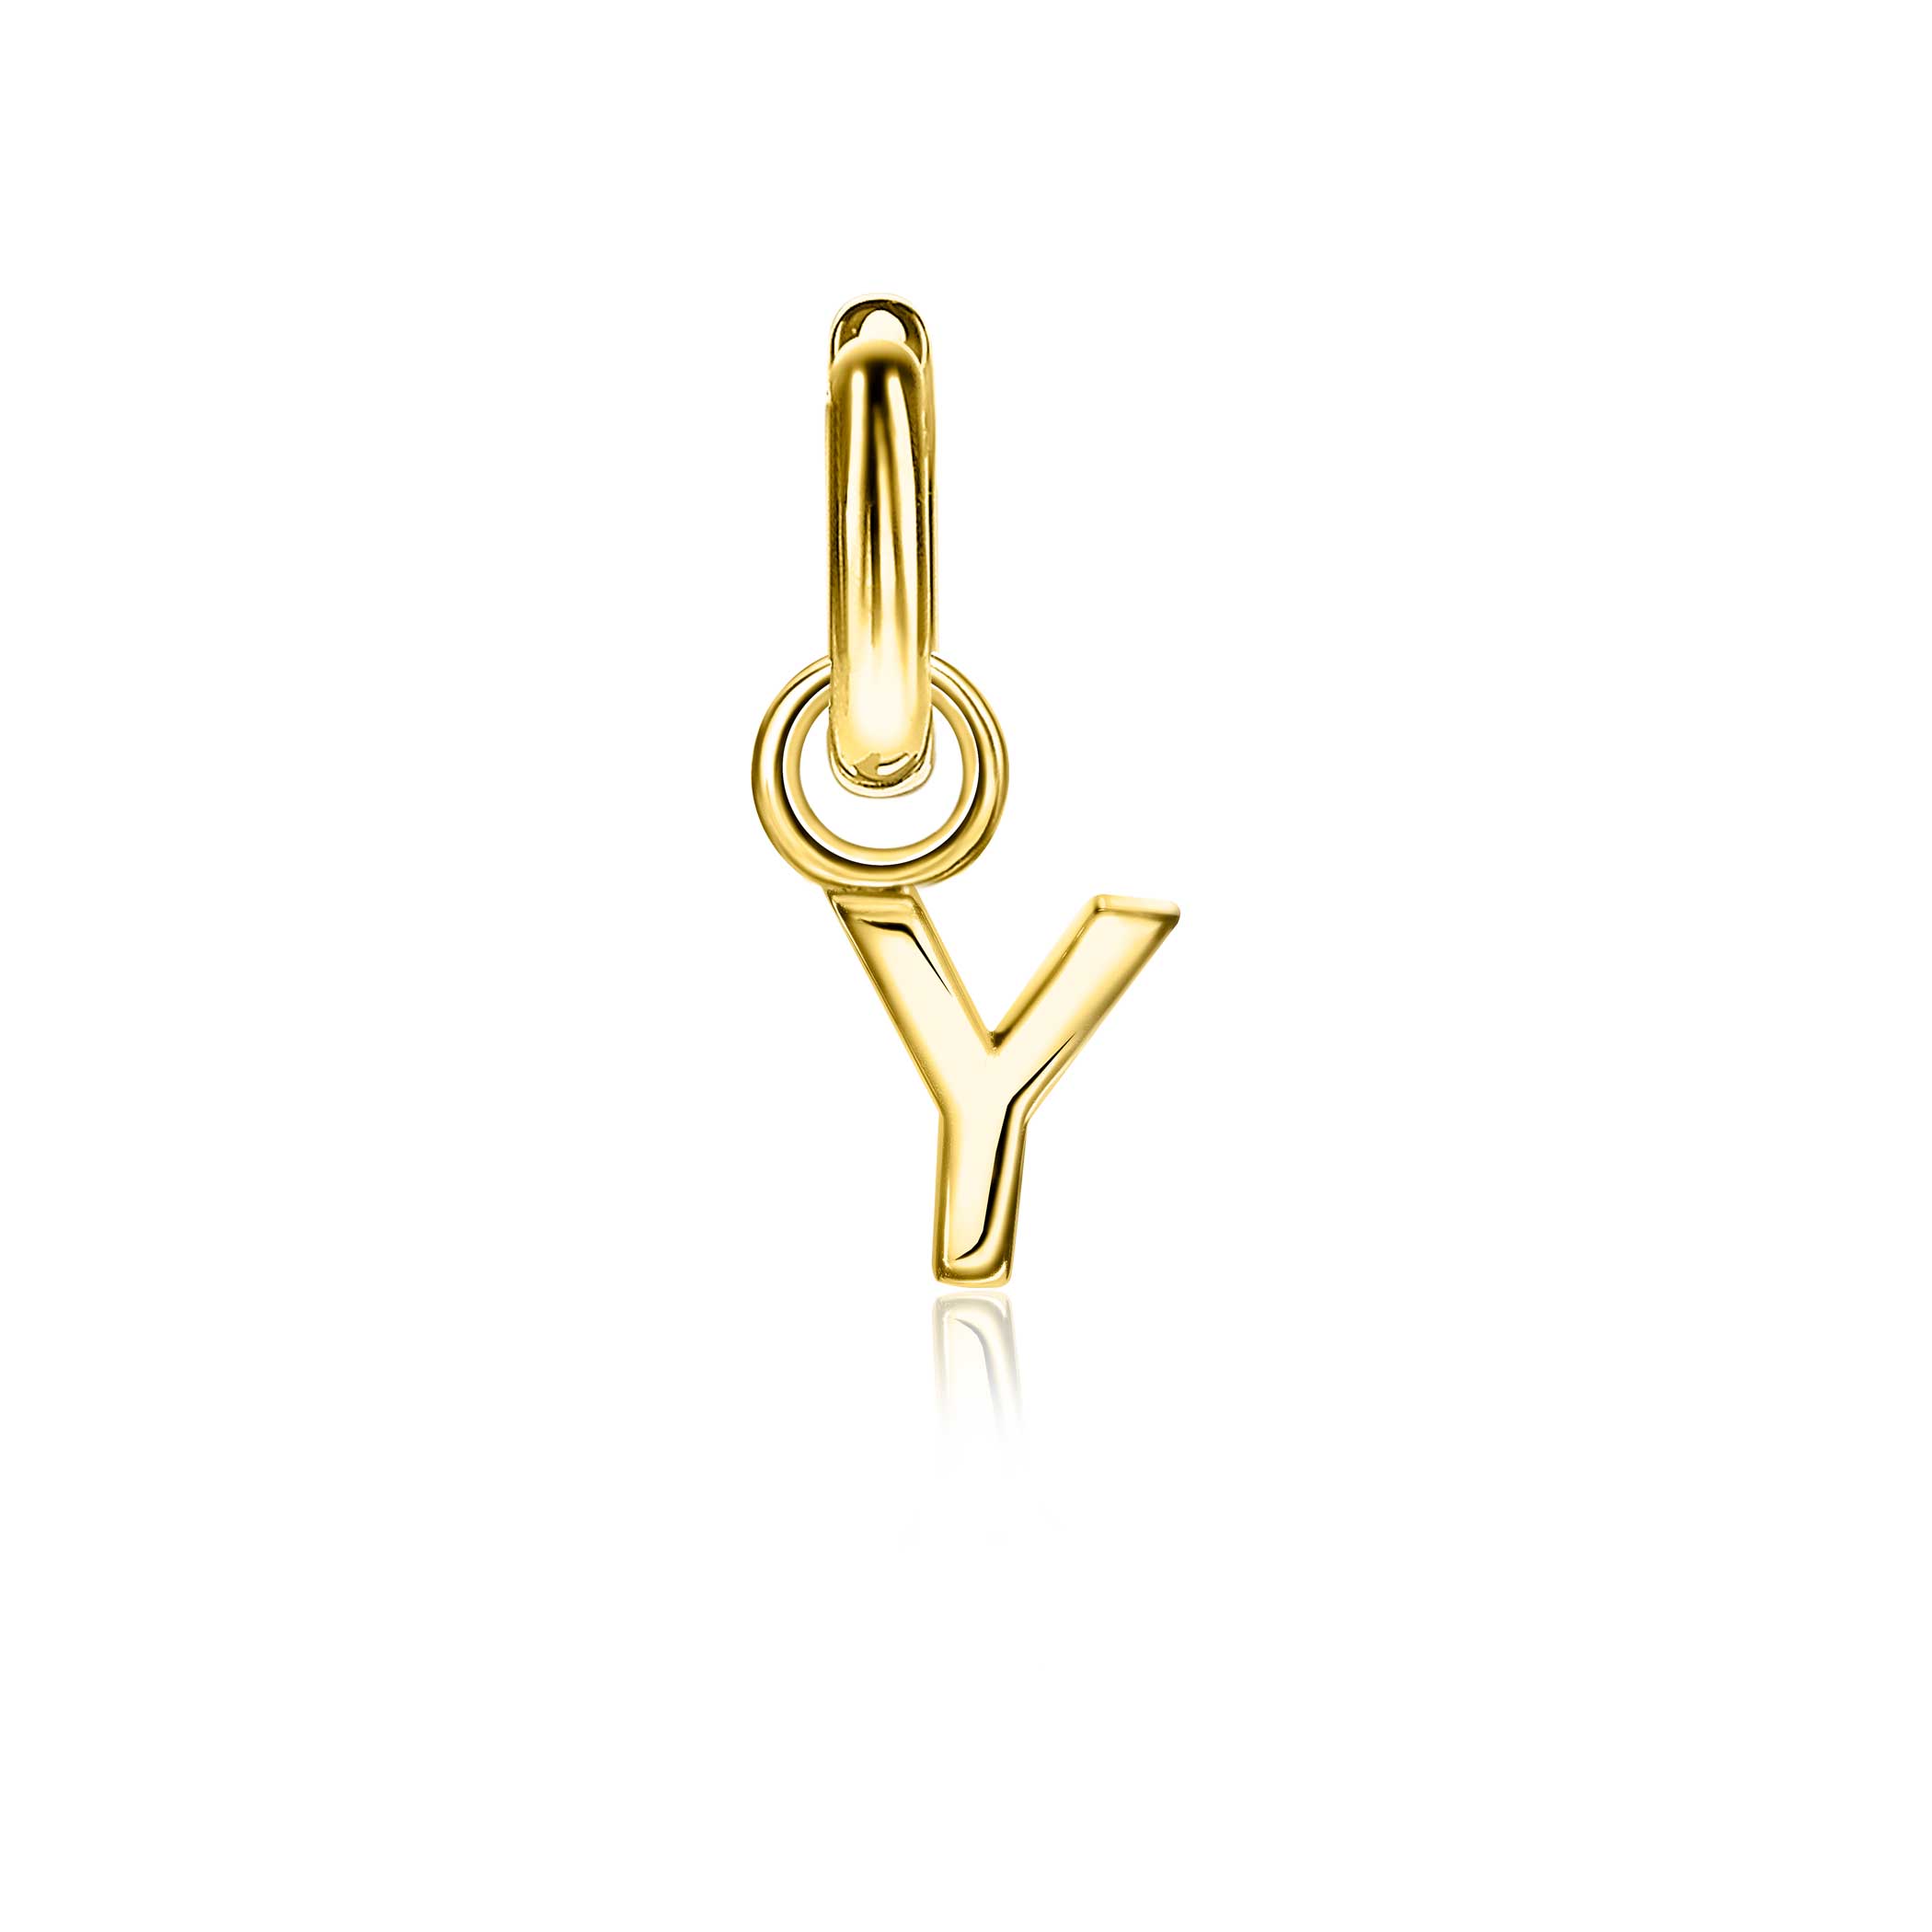 ZINZI Gold Plated Letter Earrings Pendant Y price per piece ZICH2145Y (excl. hoop earrings)